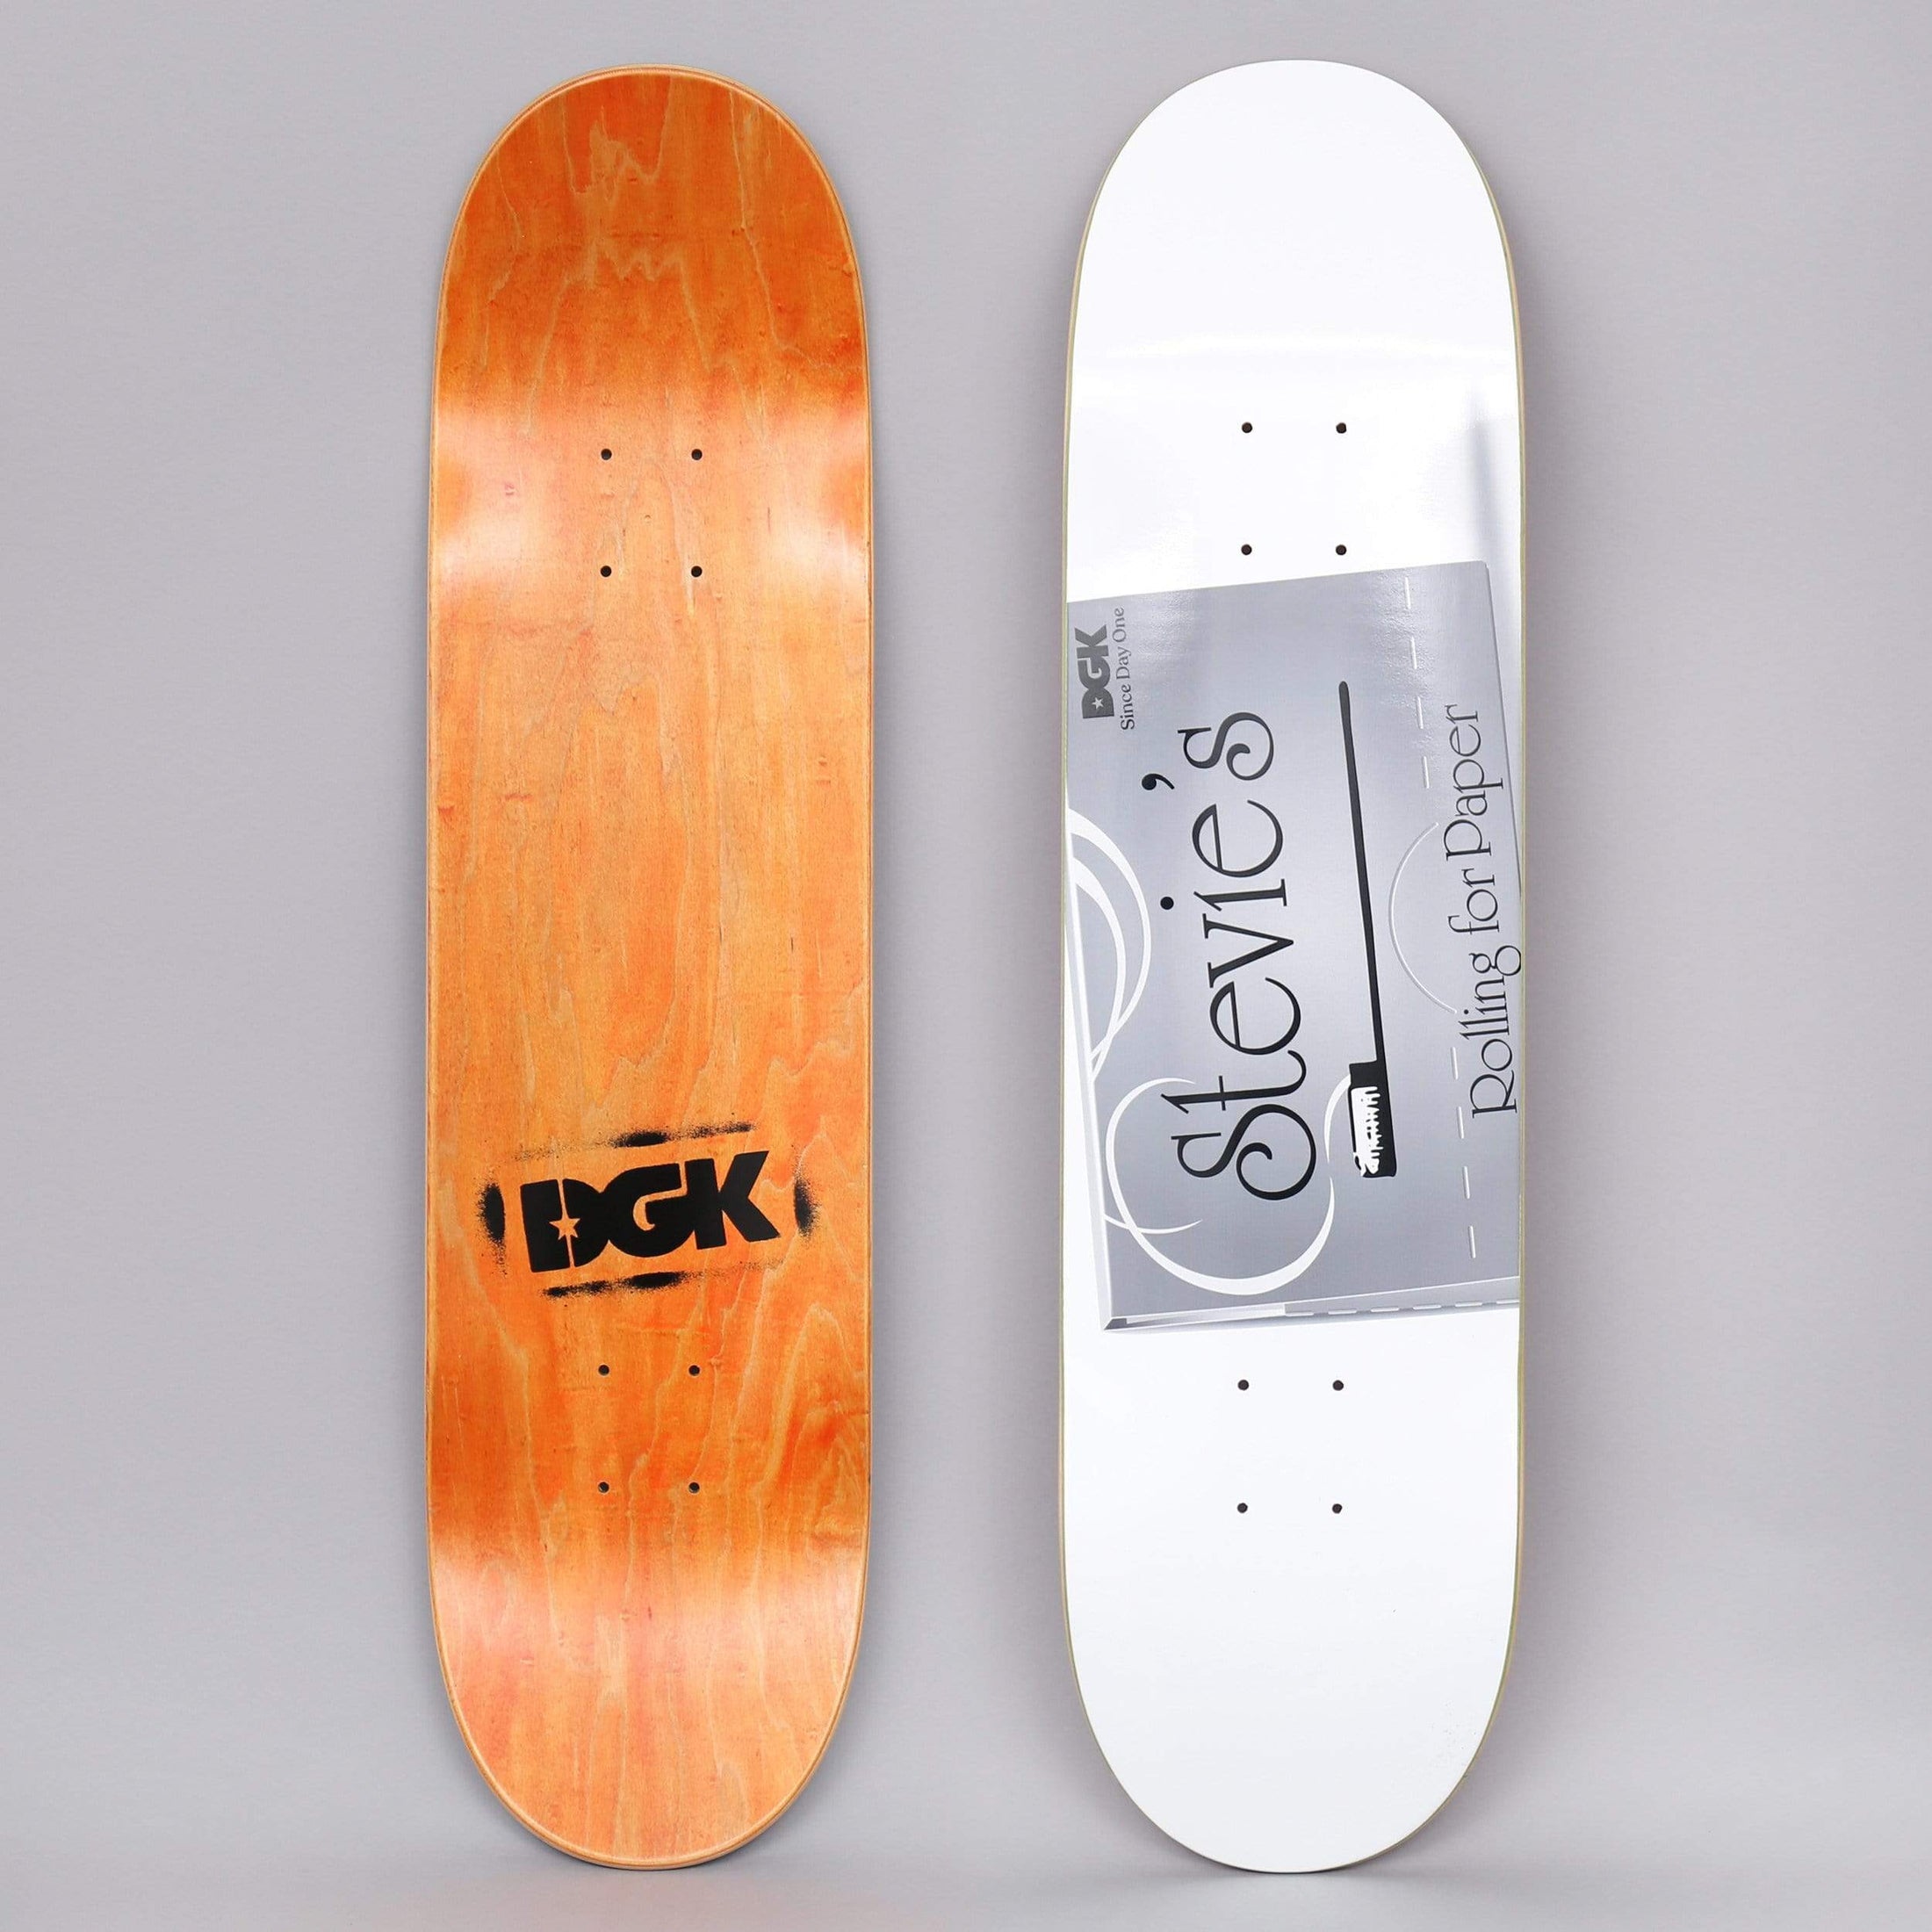 DGK 8.06 Stevie Rolling Papers Skateboard Deck White